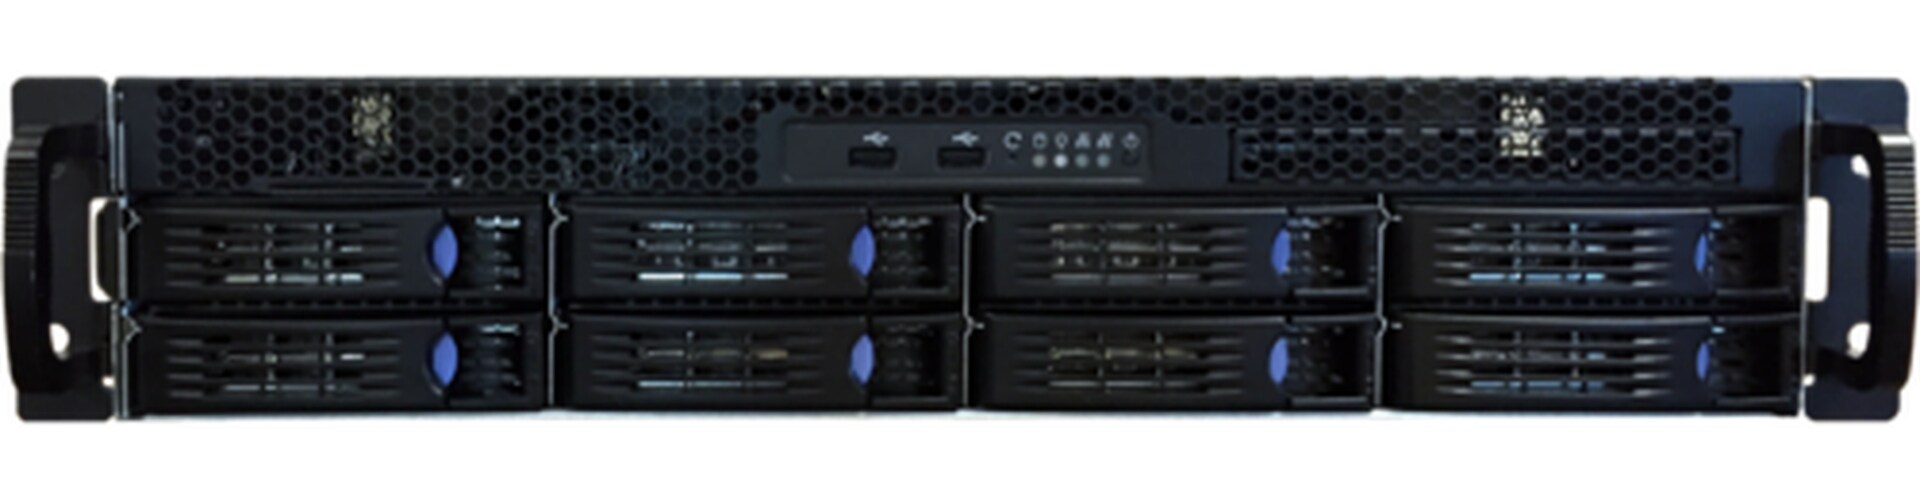 IPConfigure Reef 2U 32GB 14TB Xeon v4 Network Surveillance Server